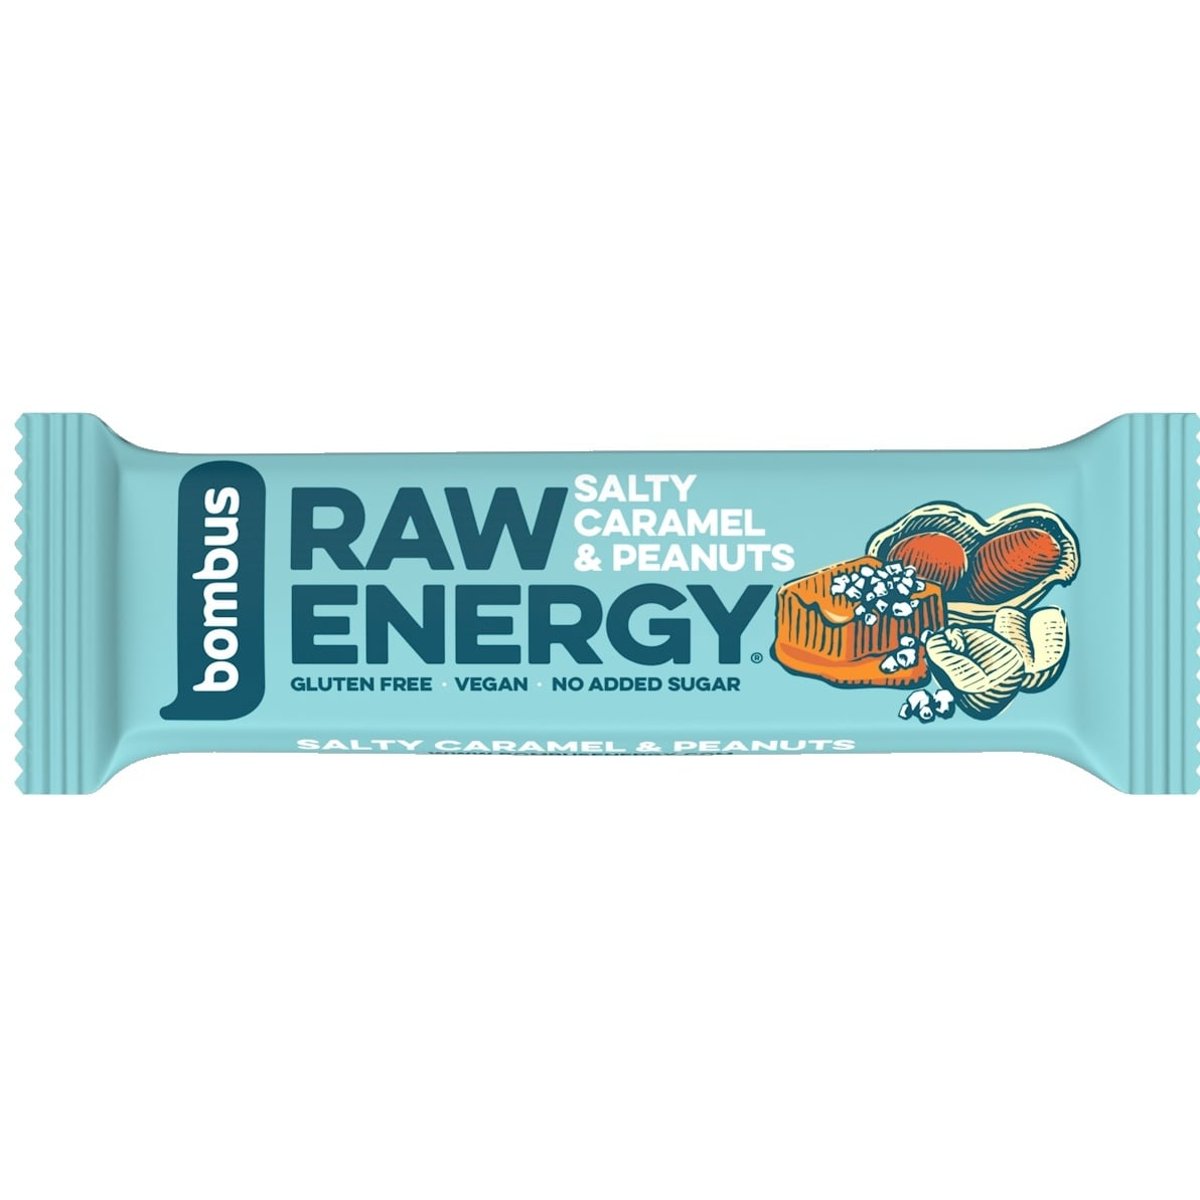 Bombus Raw energy salty caramel & peanuts